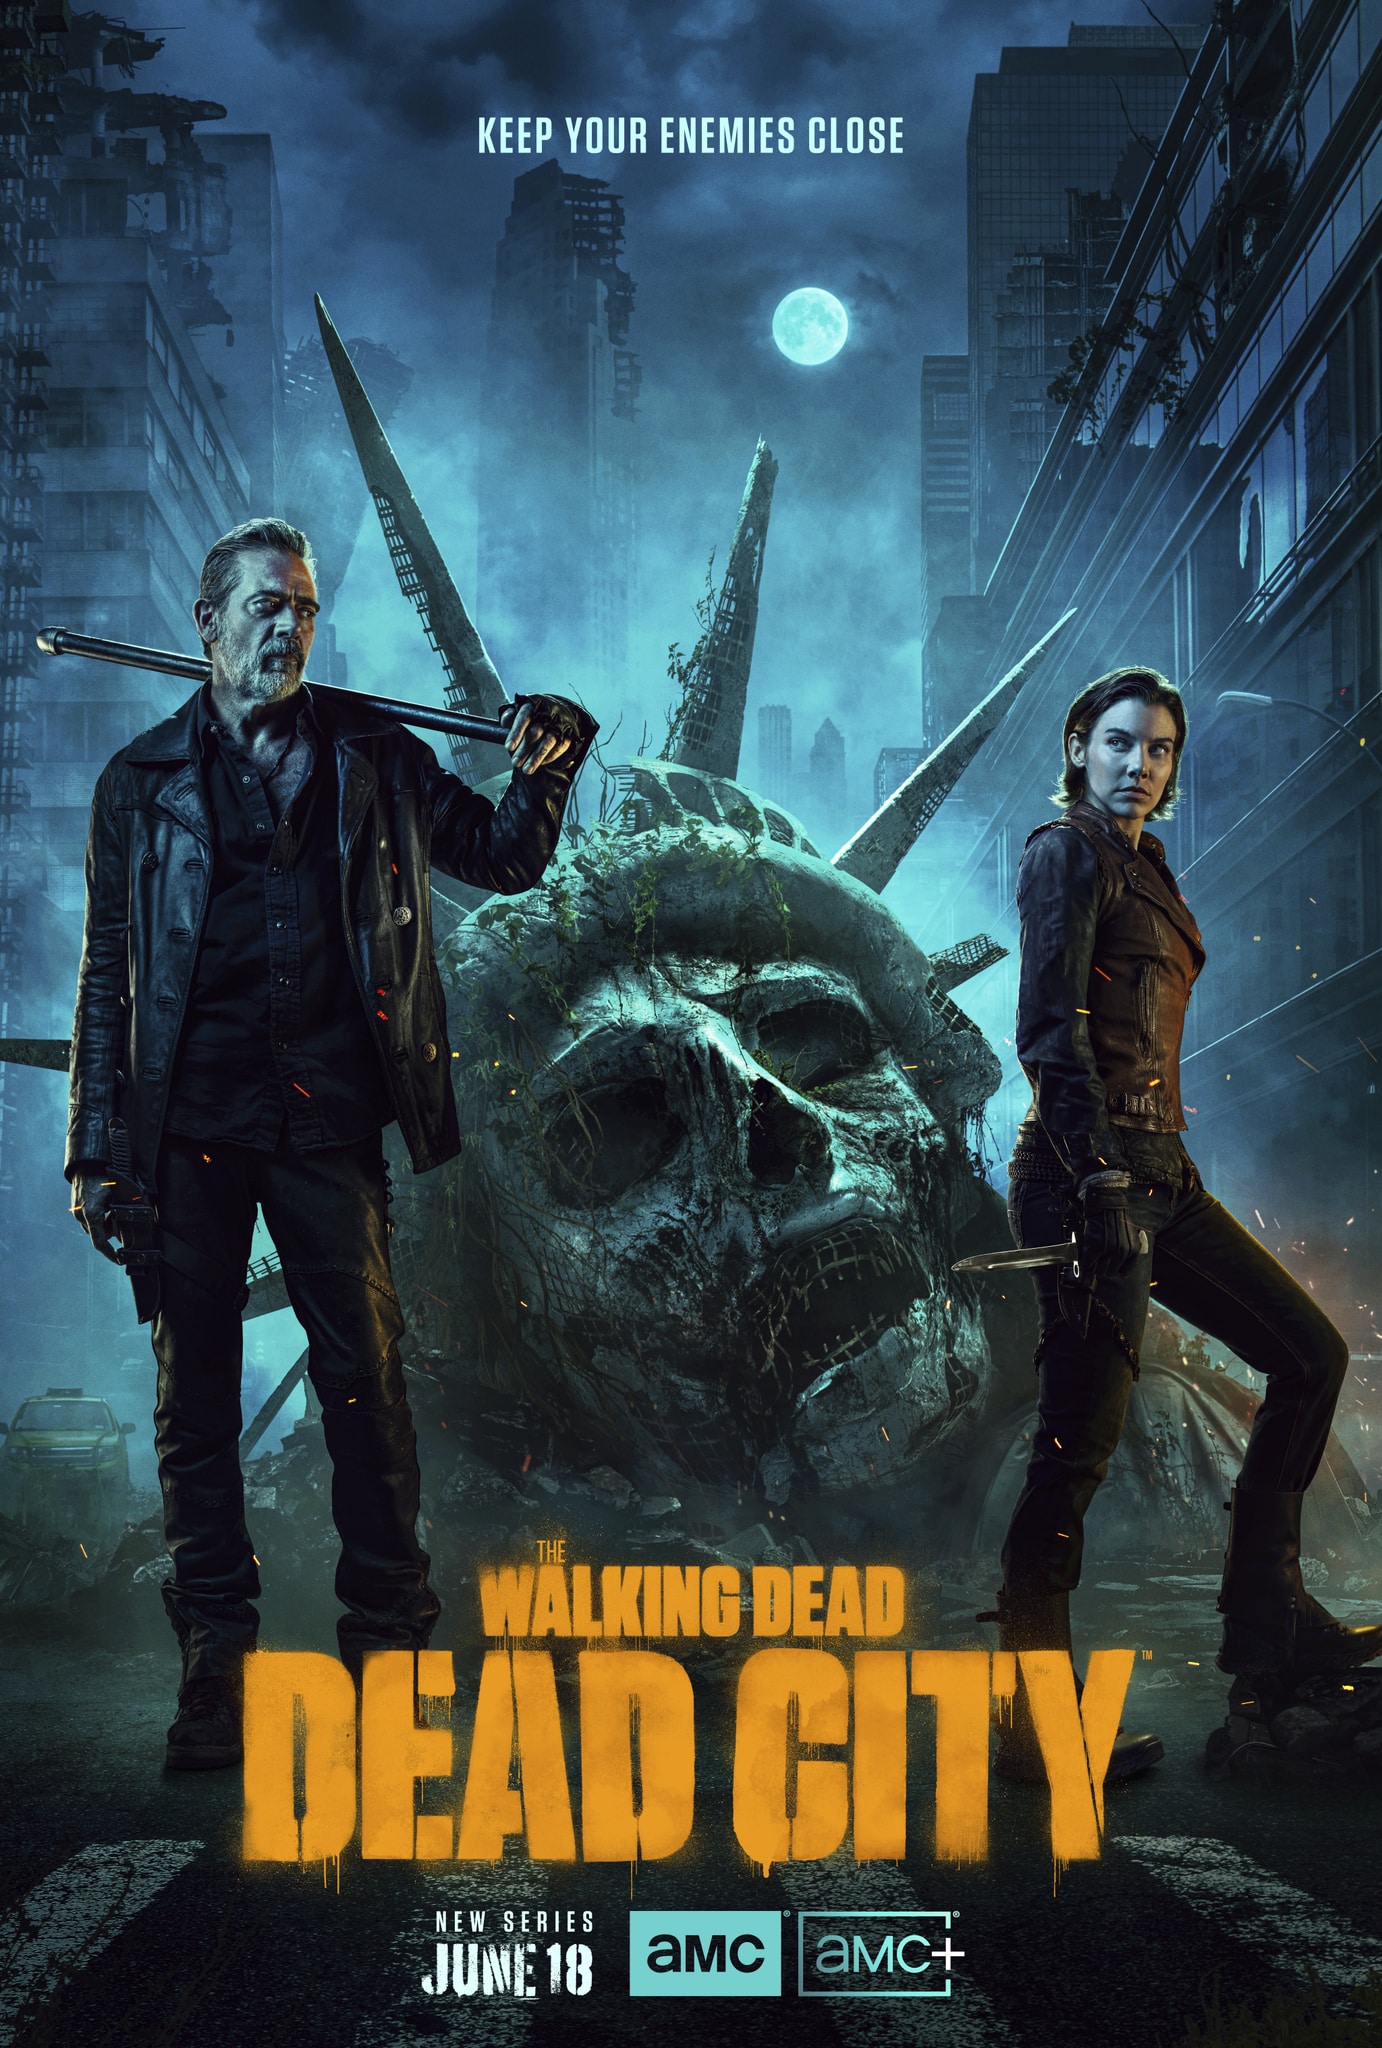 The Walking Dead Dead City - Teaser Poster